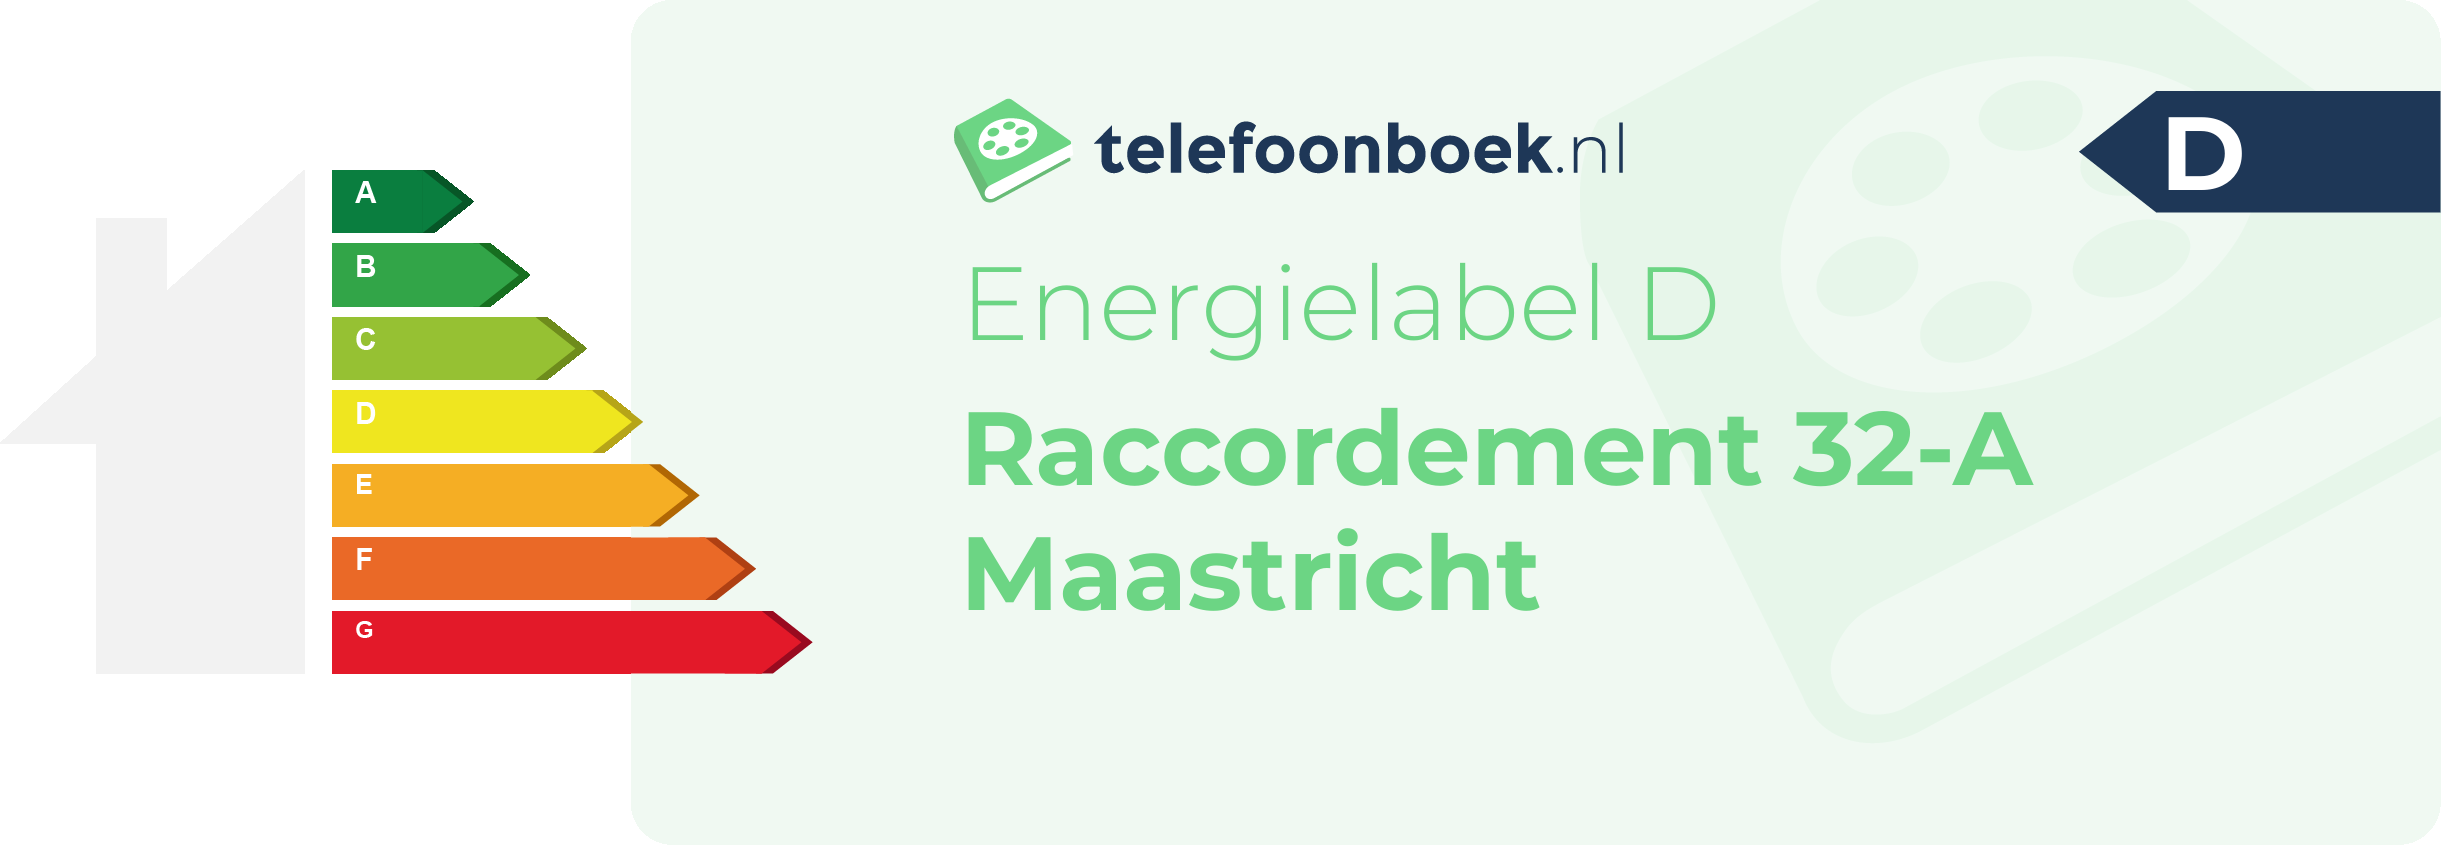 Energielabel Raccordement 32-A Maastricht